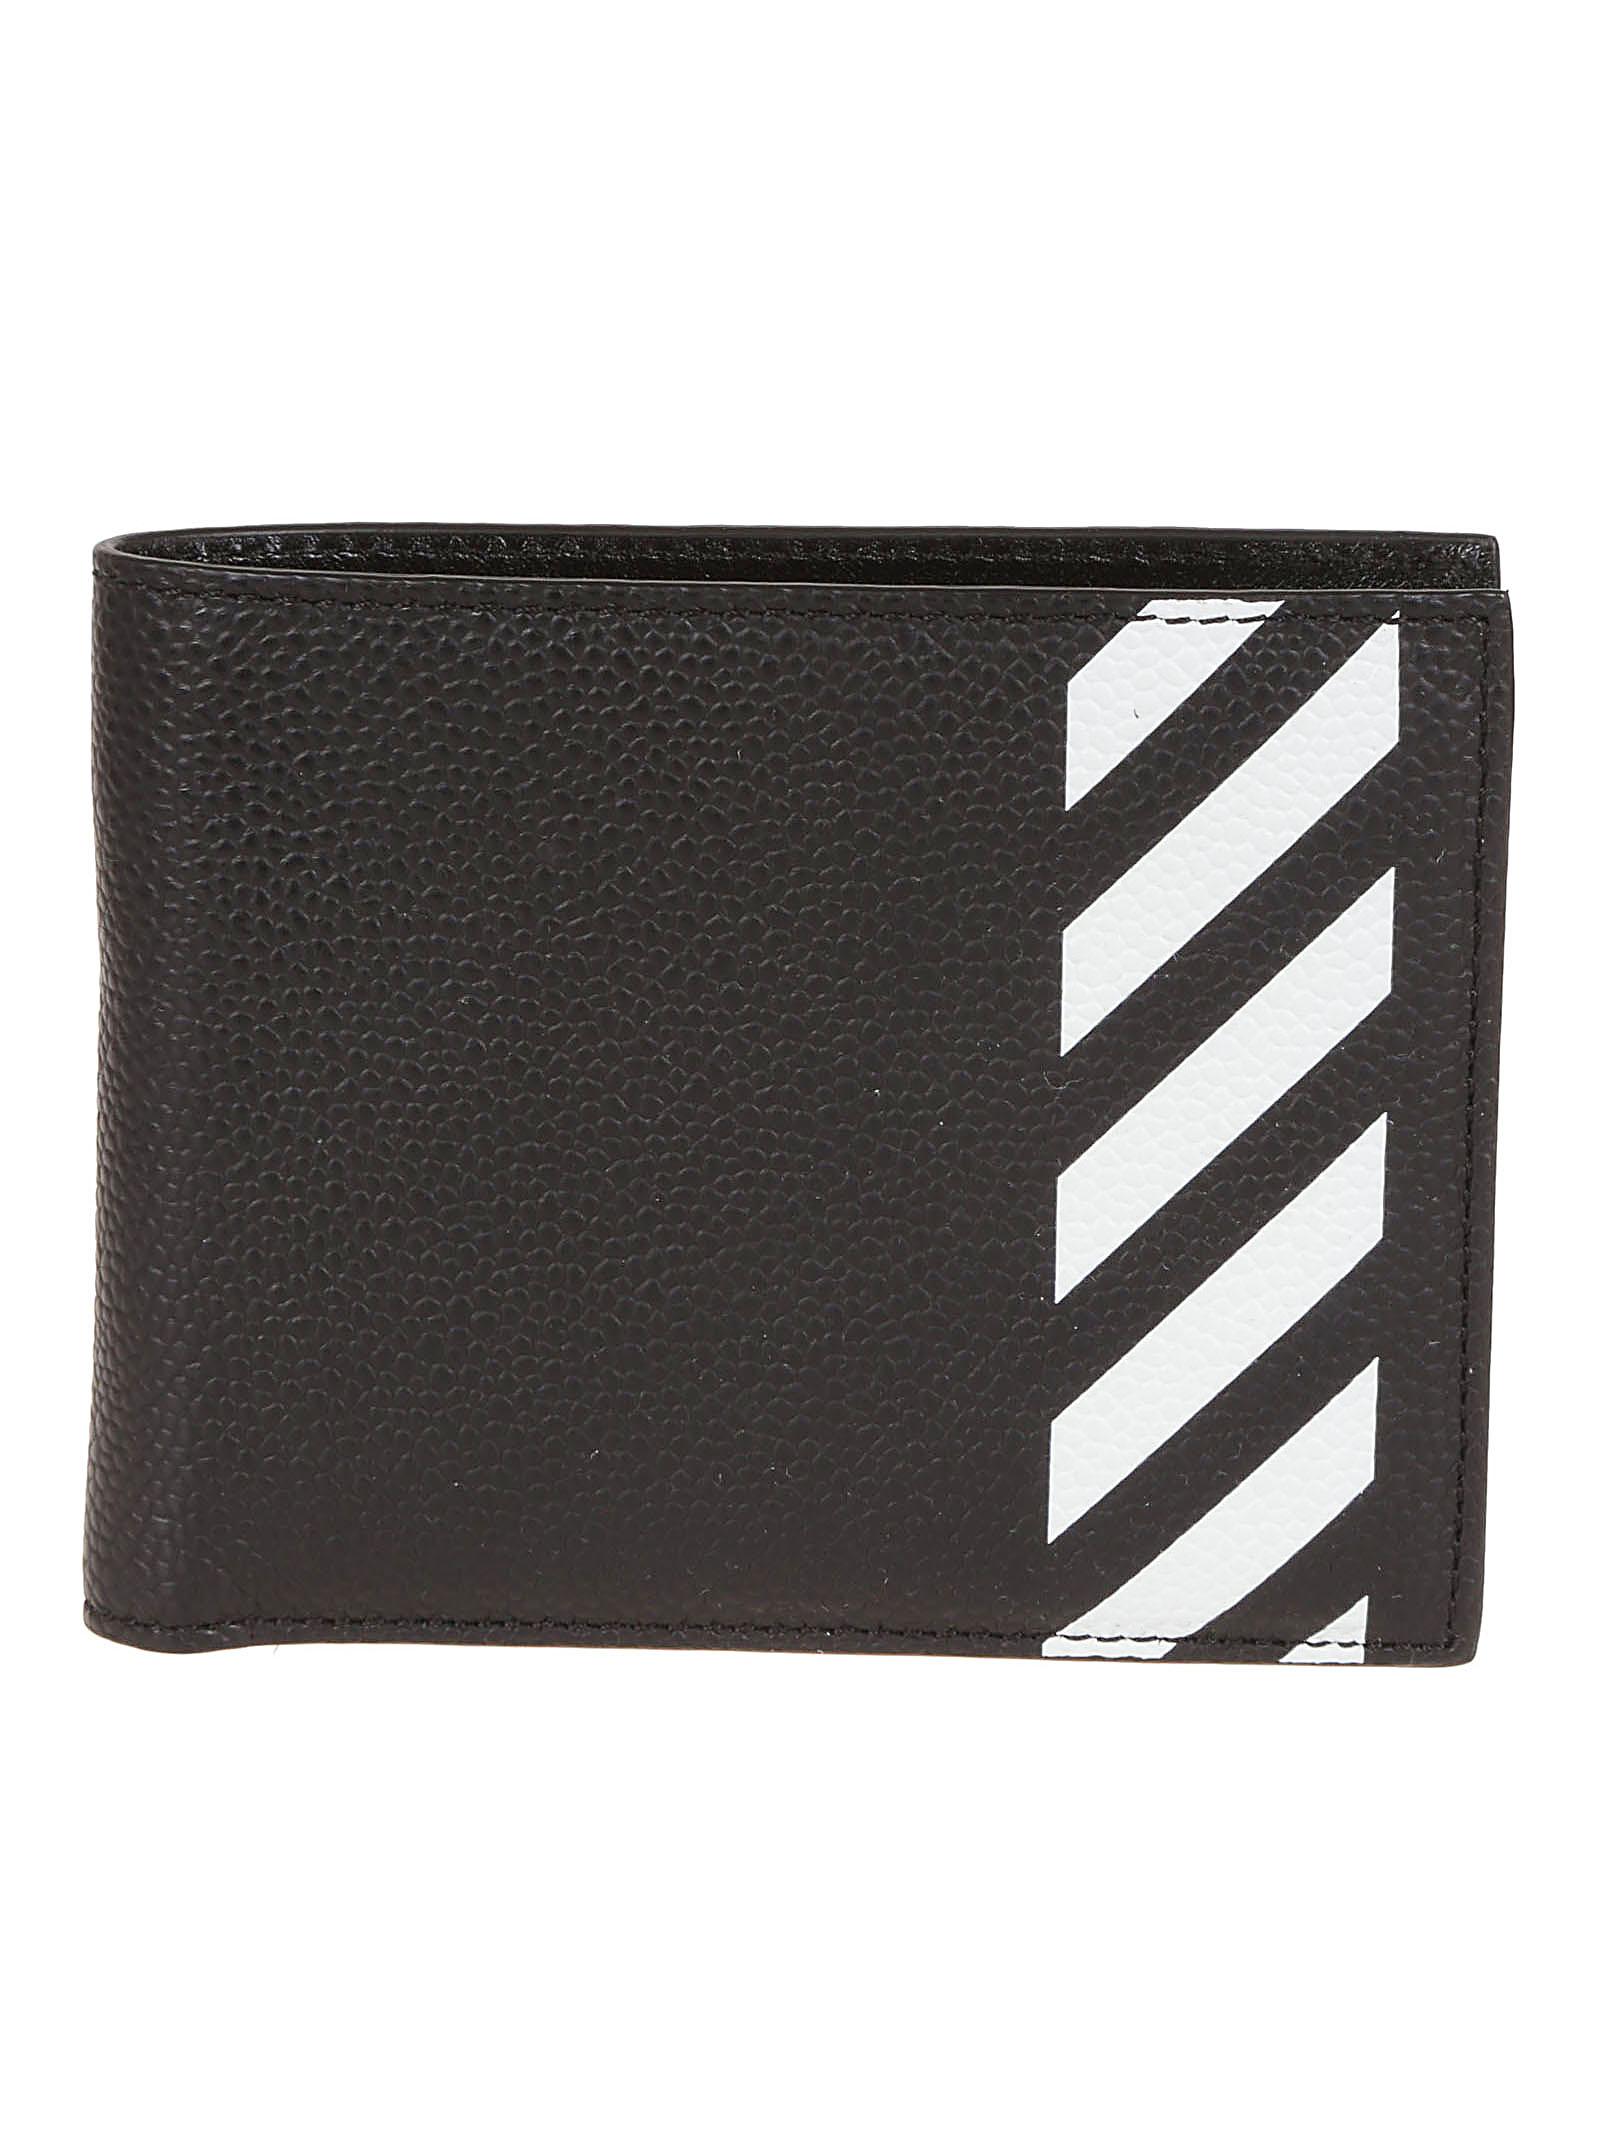 Off-White c/o Virgil Abloh Leather Diag Bifold Wallet in Black for Men - Lyst